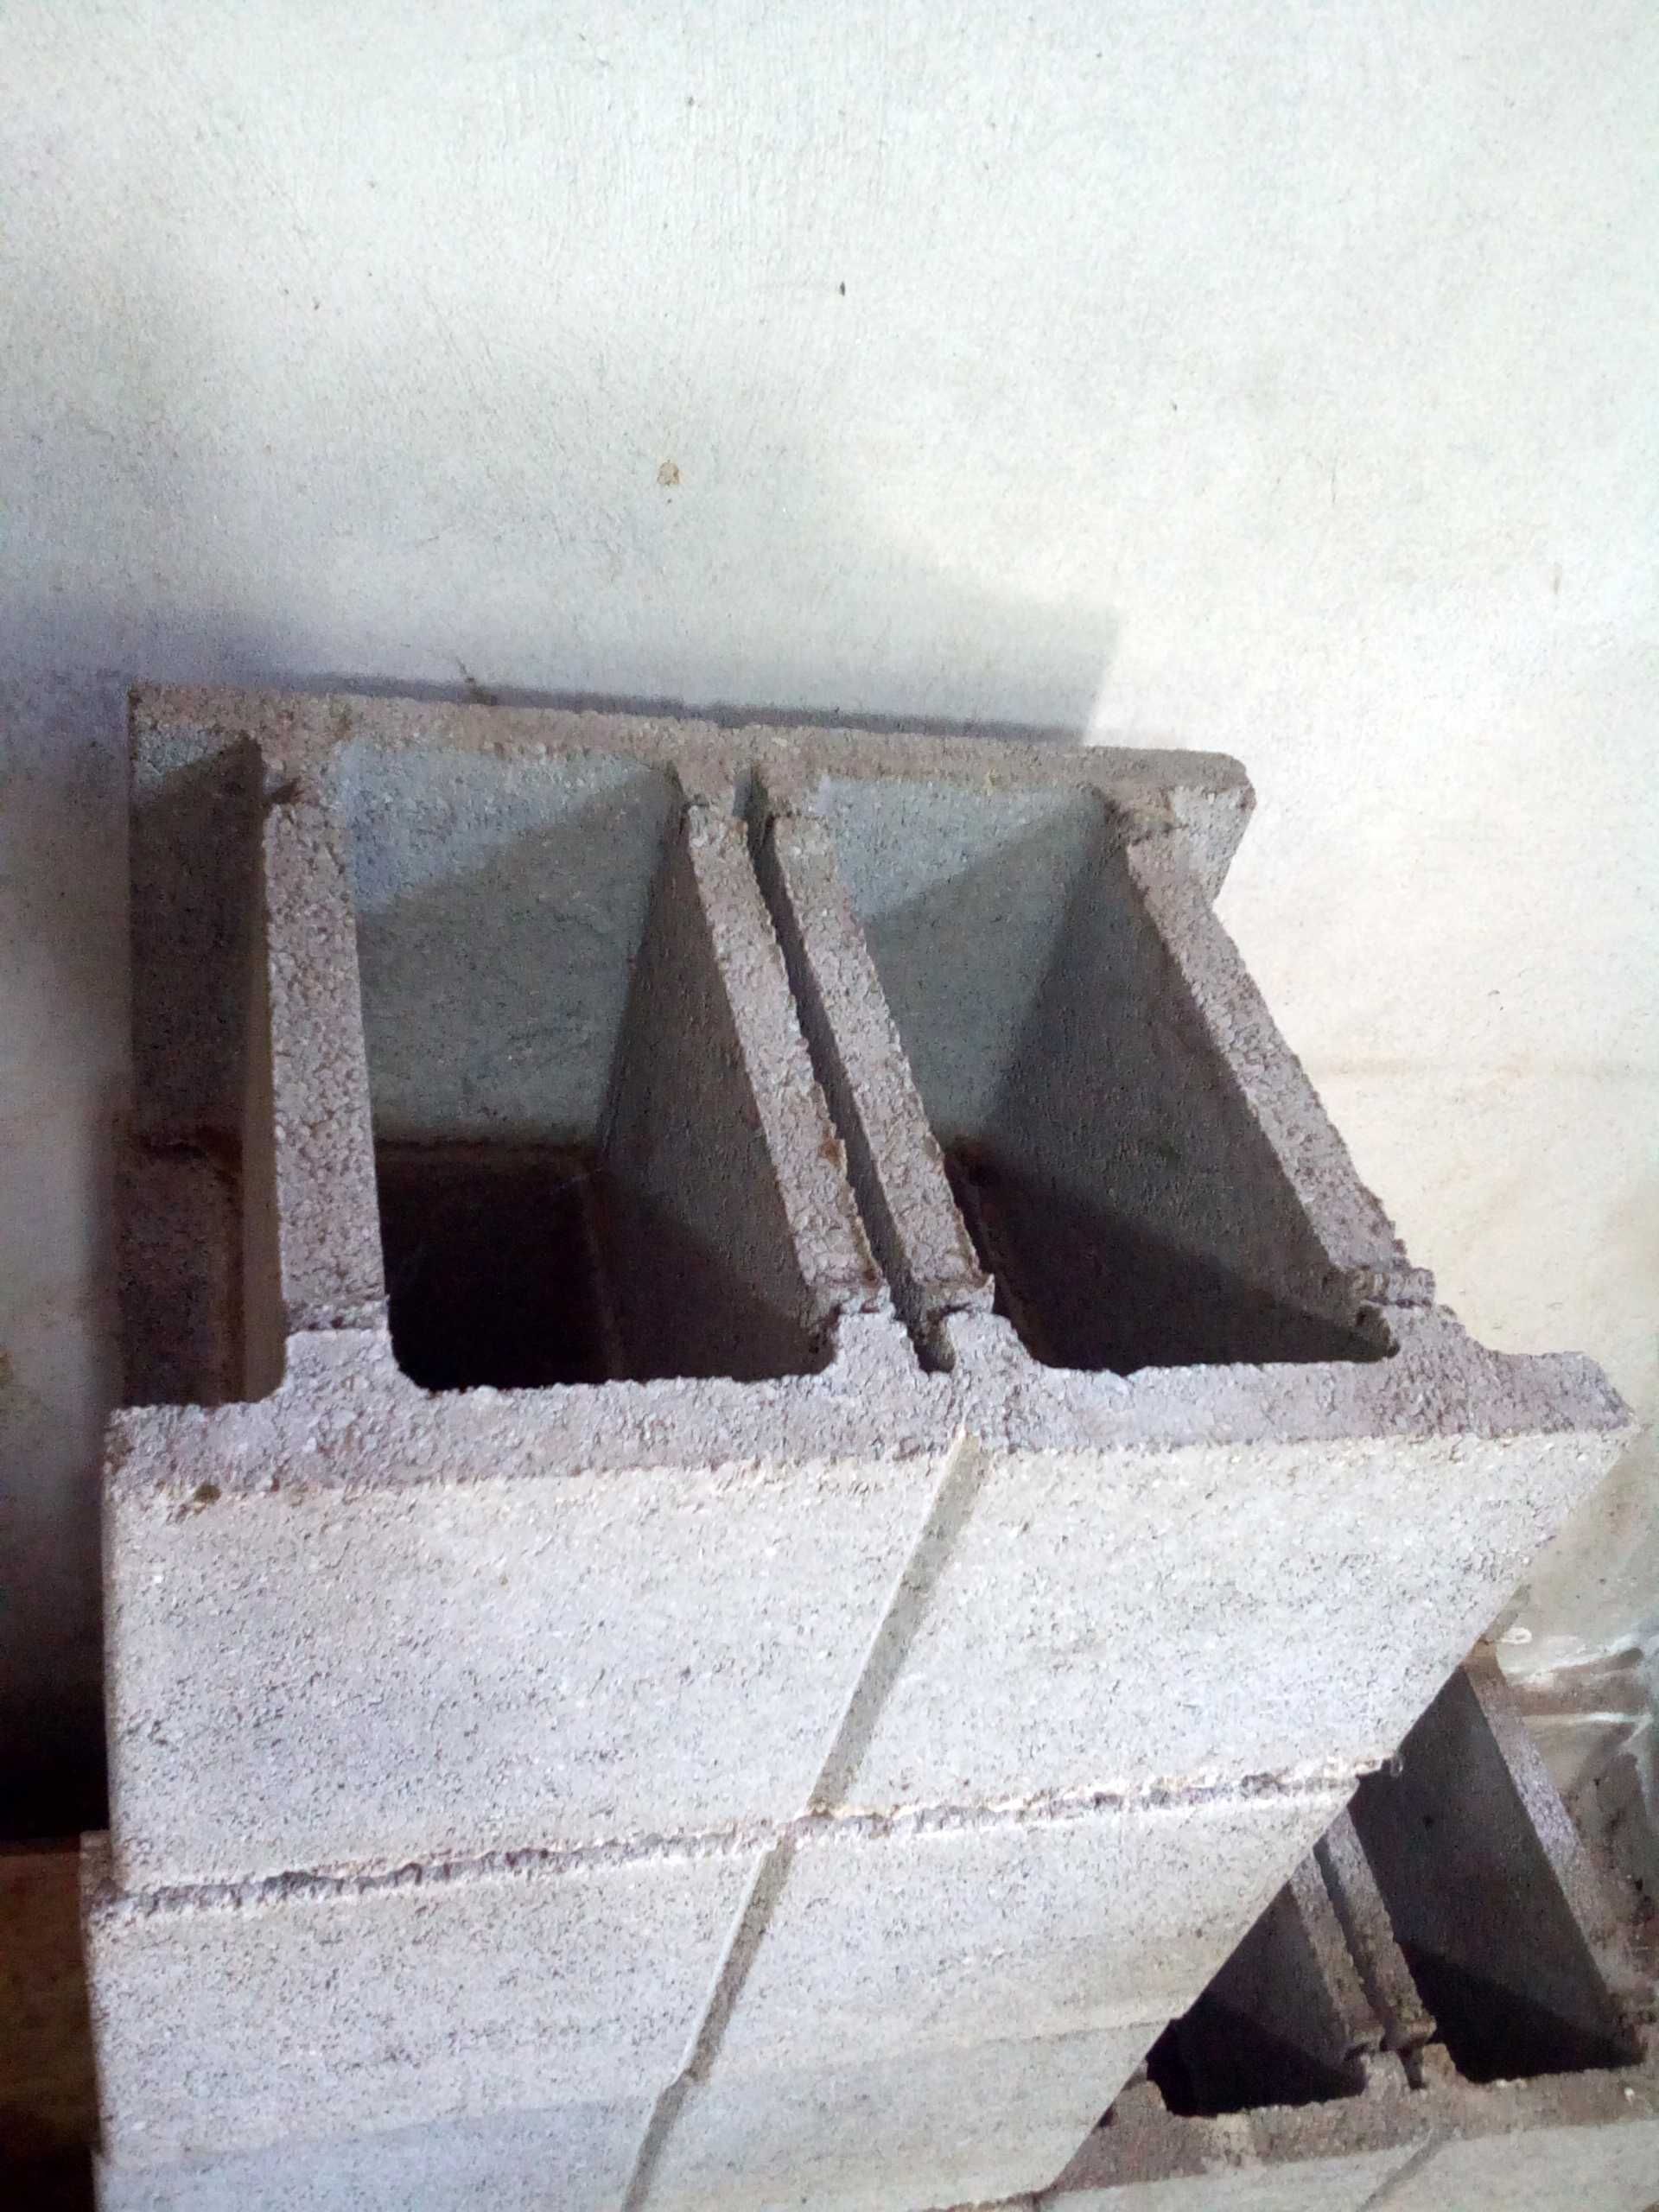 Boltari ciment pentru fundatie sau zidarie 8buc x2 –in stare excelenta